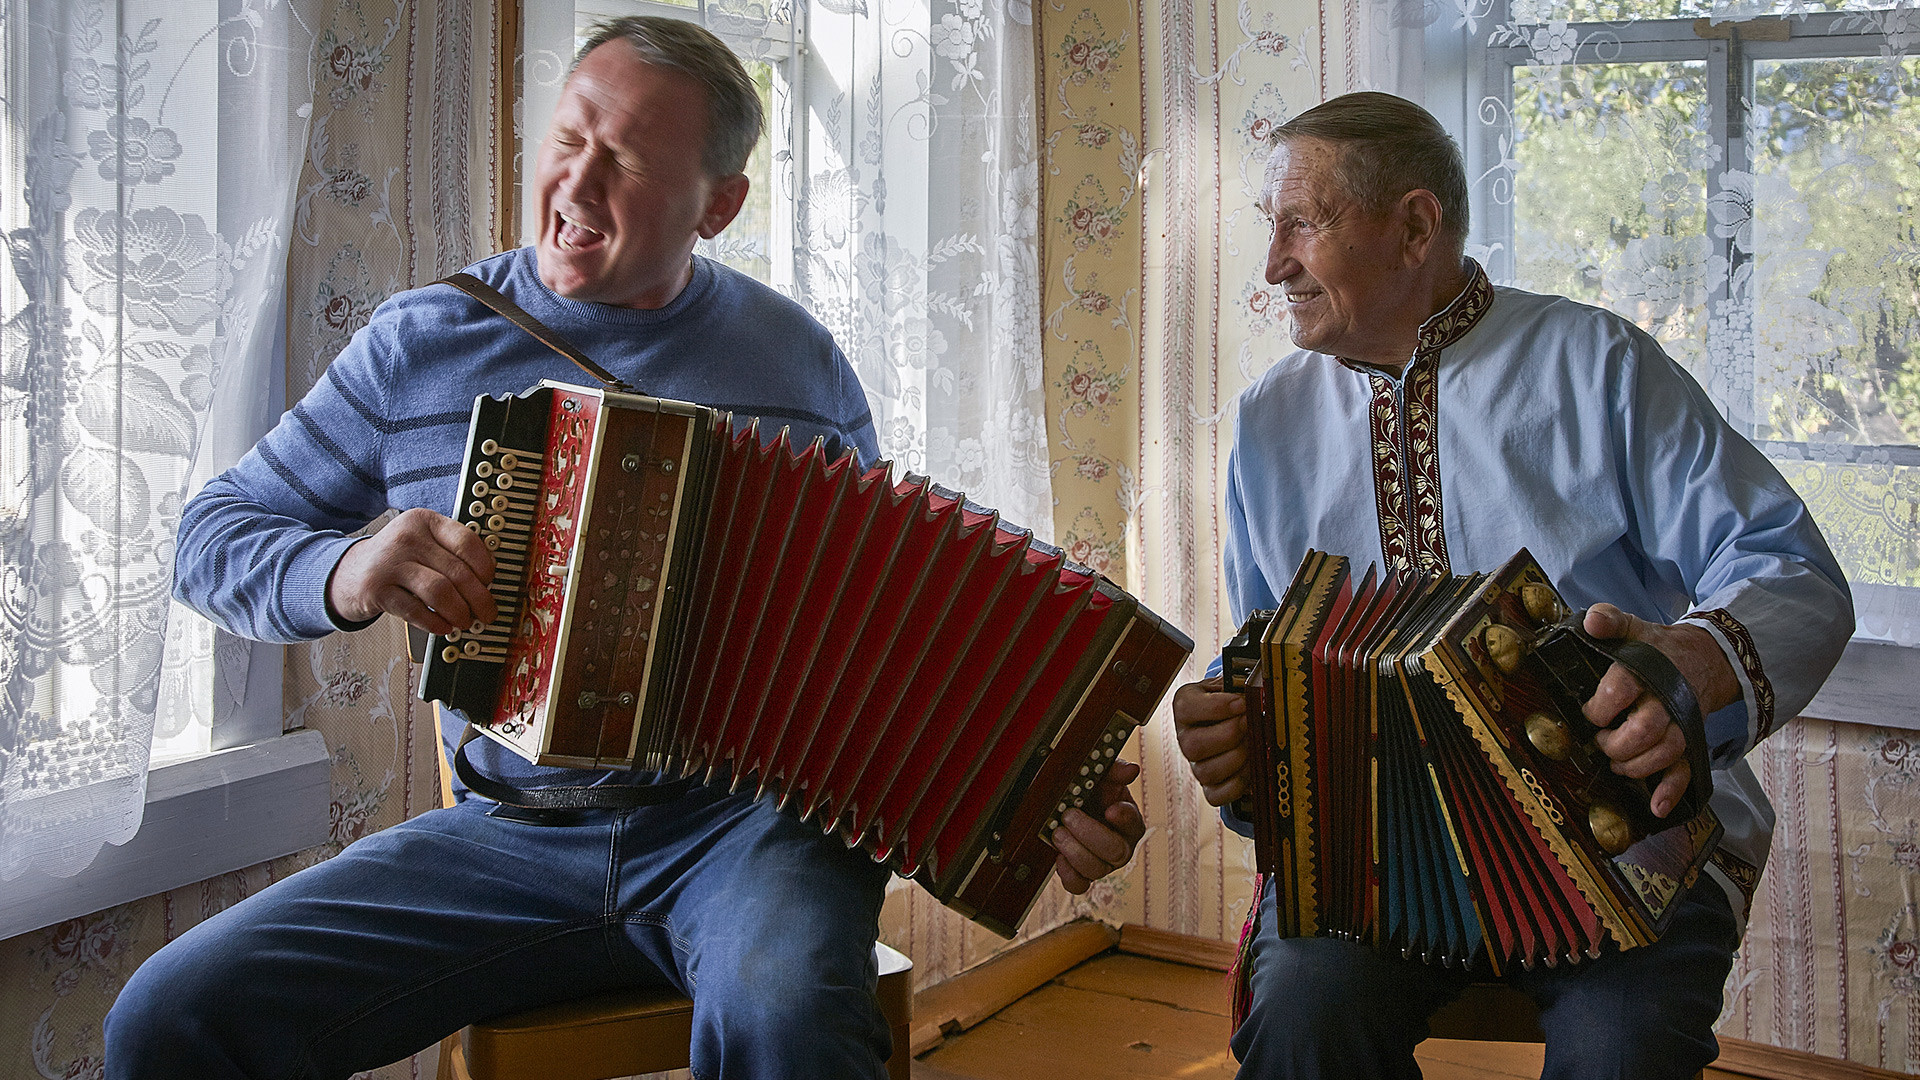 Ivan Pechkov, chef de kolkhoz (ferme collective), avec le plus vieil accordéoniste du district, Veniamin Kourbatov. Région de Vologda, village de Tarnogorski gorodok.

